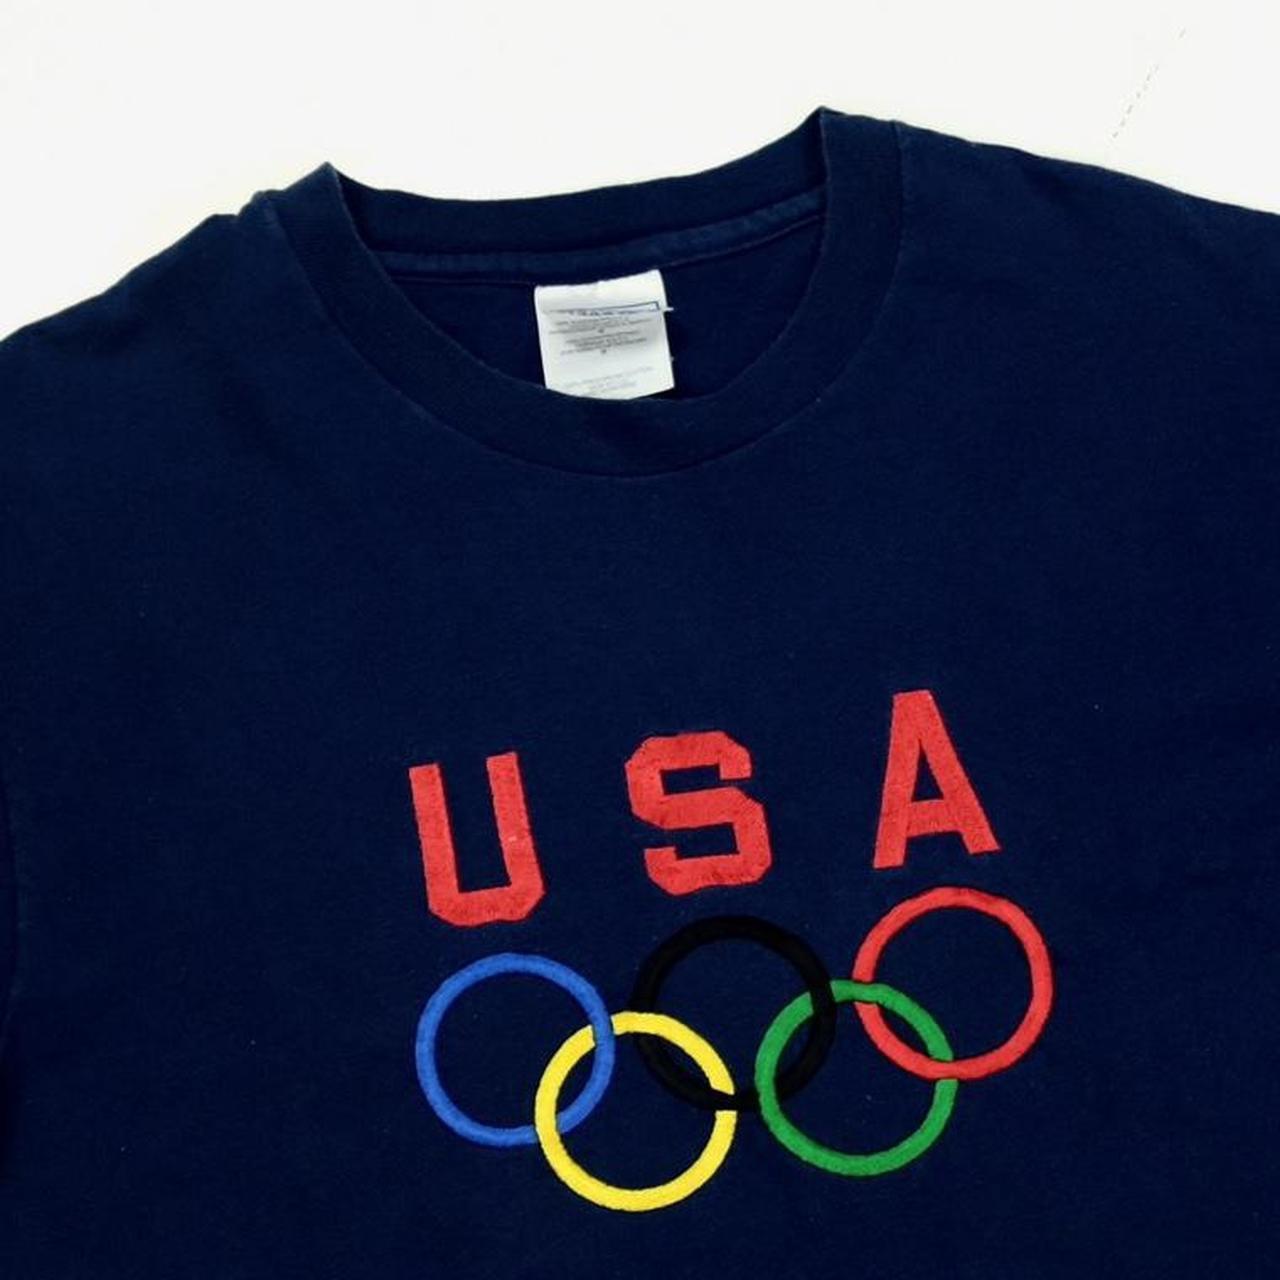 USA Olympics T-Shirt